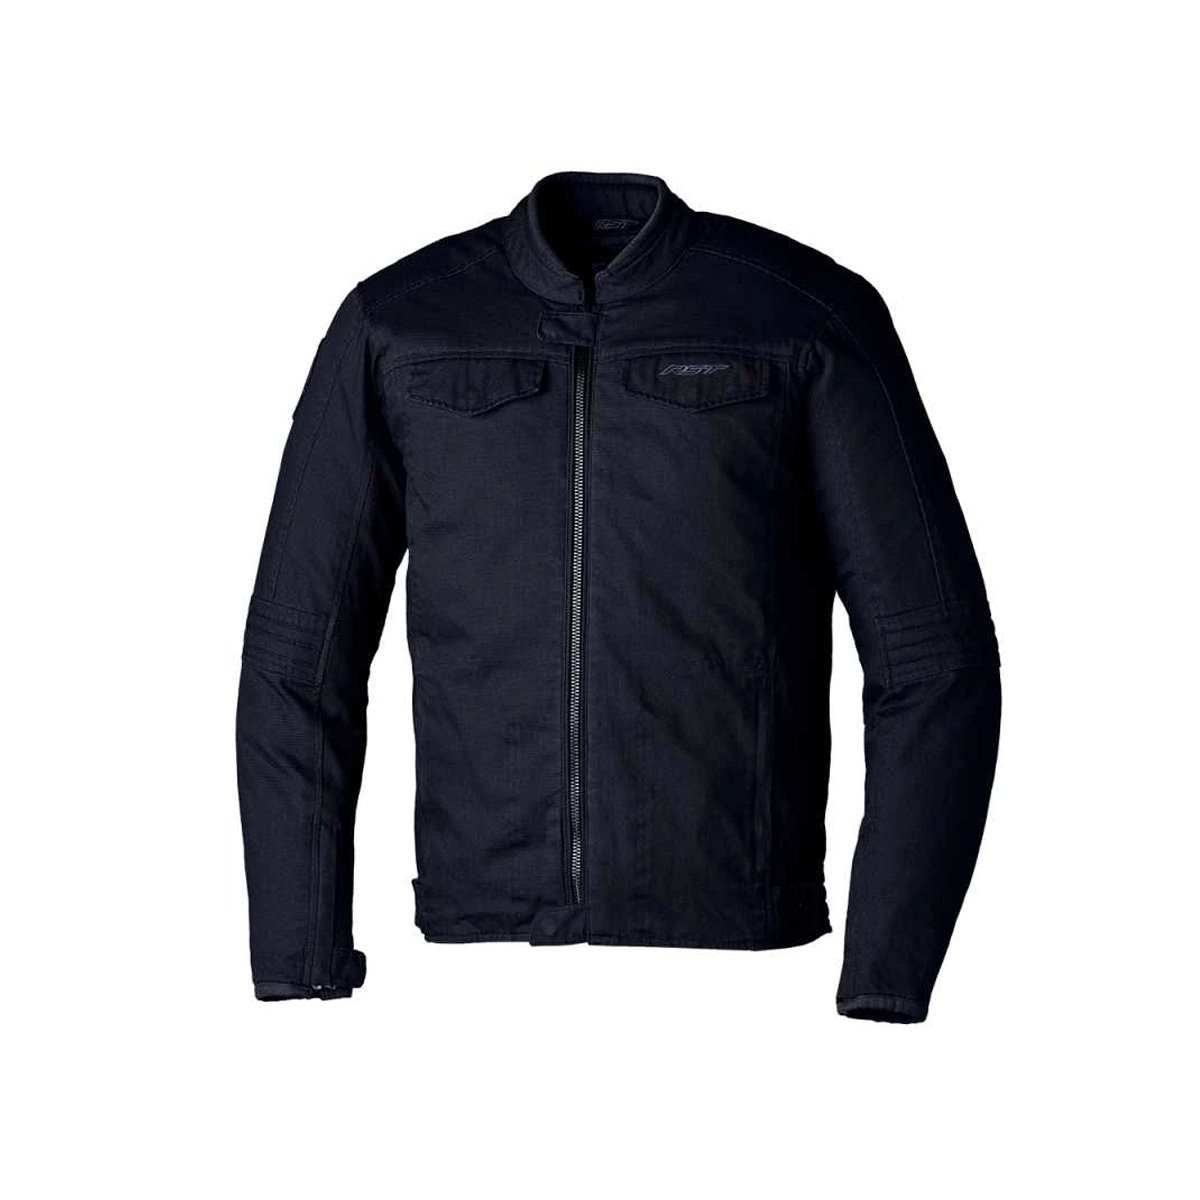 Image of RST IOM TT Crosby 2 CE Textile Jacket Men Black Talla 48